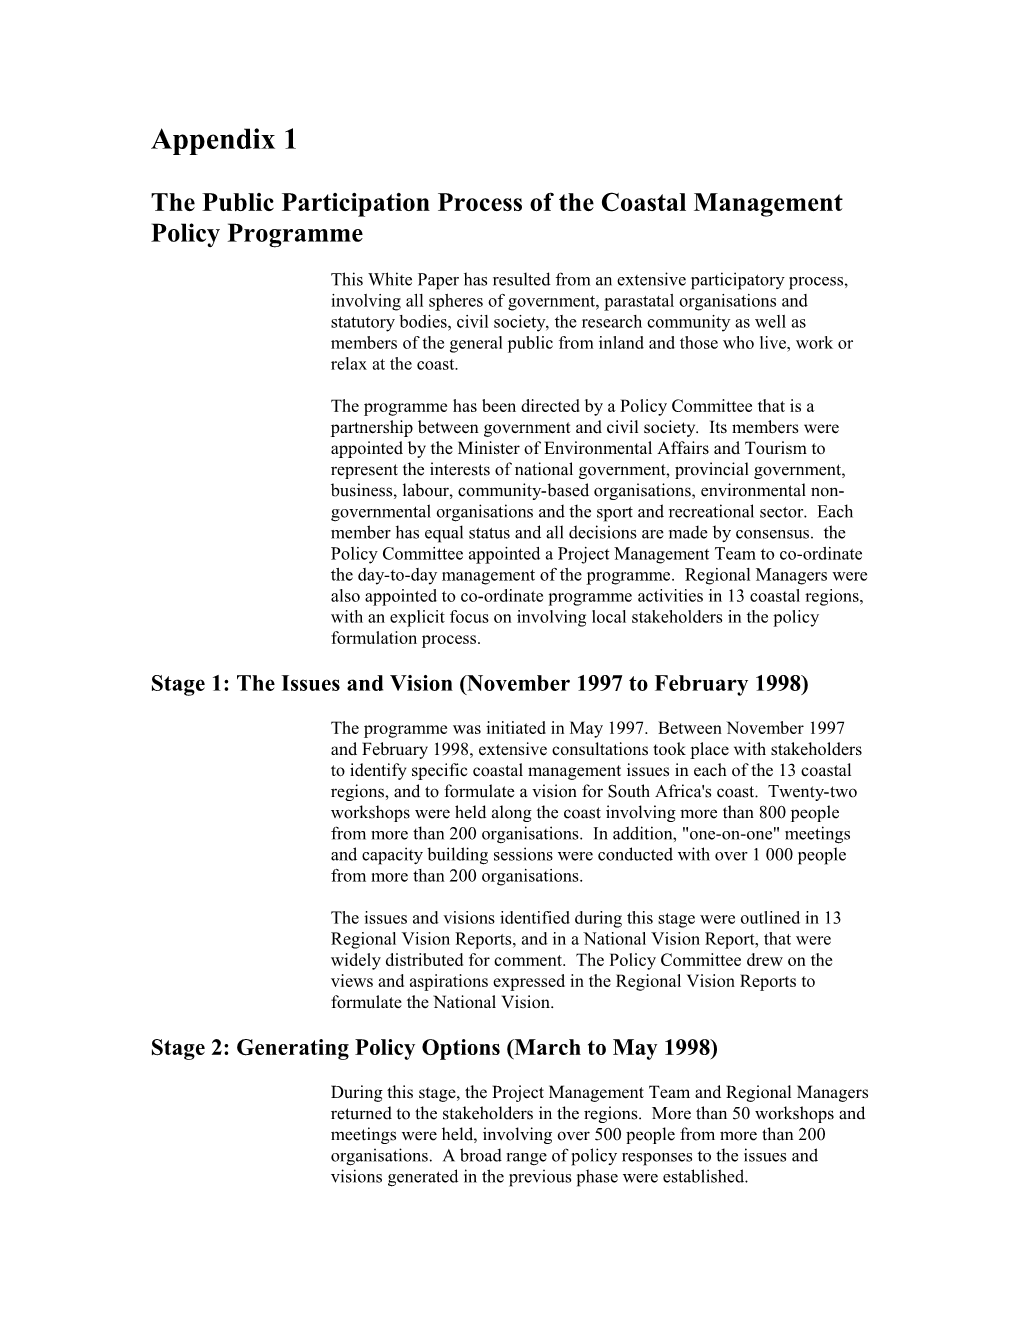 White Paper: Coastal Management